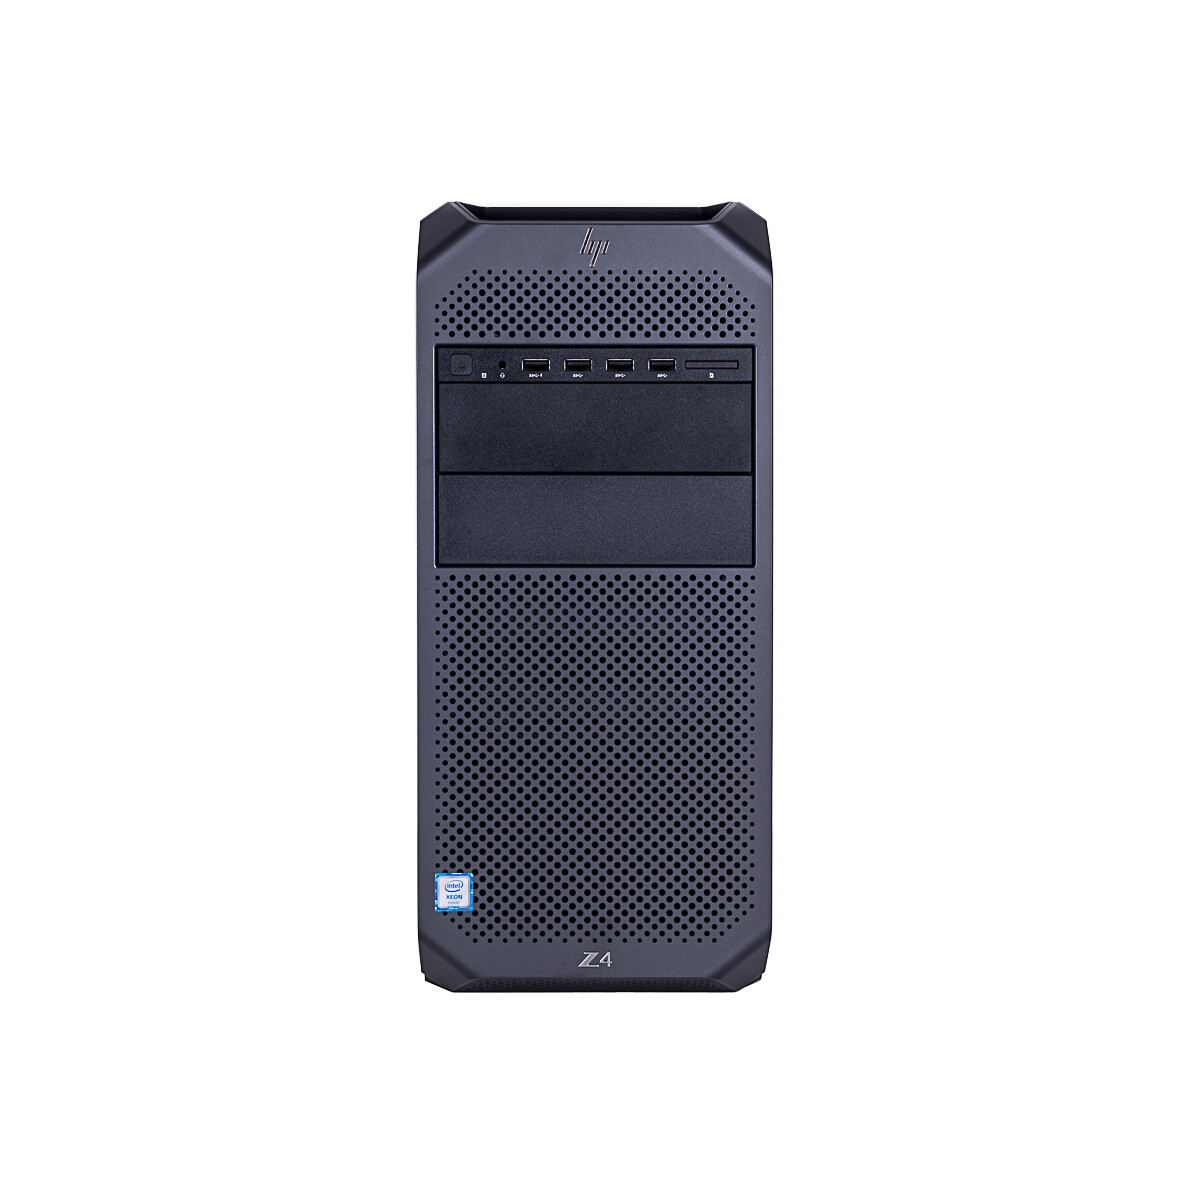 HP Z4 G4 Business Workstation Intel Xeon 10-Core W-2155, max. 4.50GHz, 64GB DDR4, 512GB M.2 SSD, NVIDIA Quadro P4000, 8GB, WIN 10 Pro 